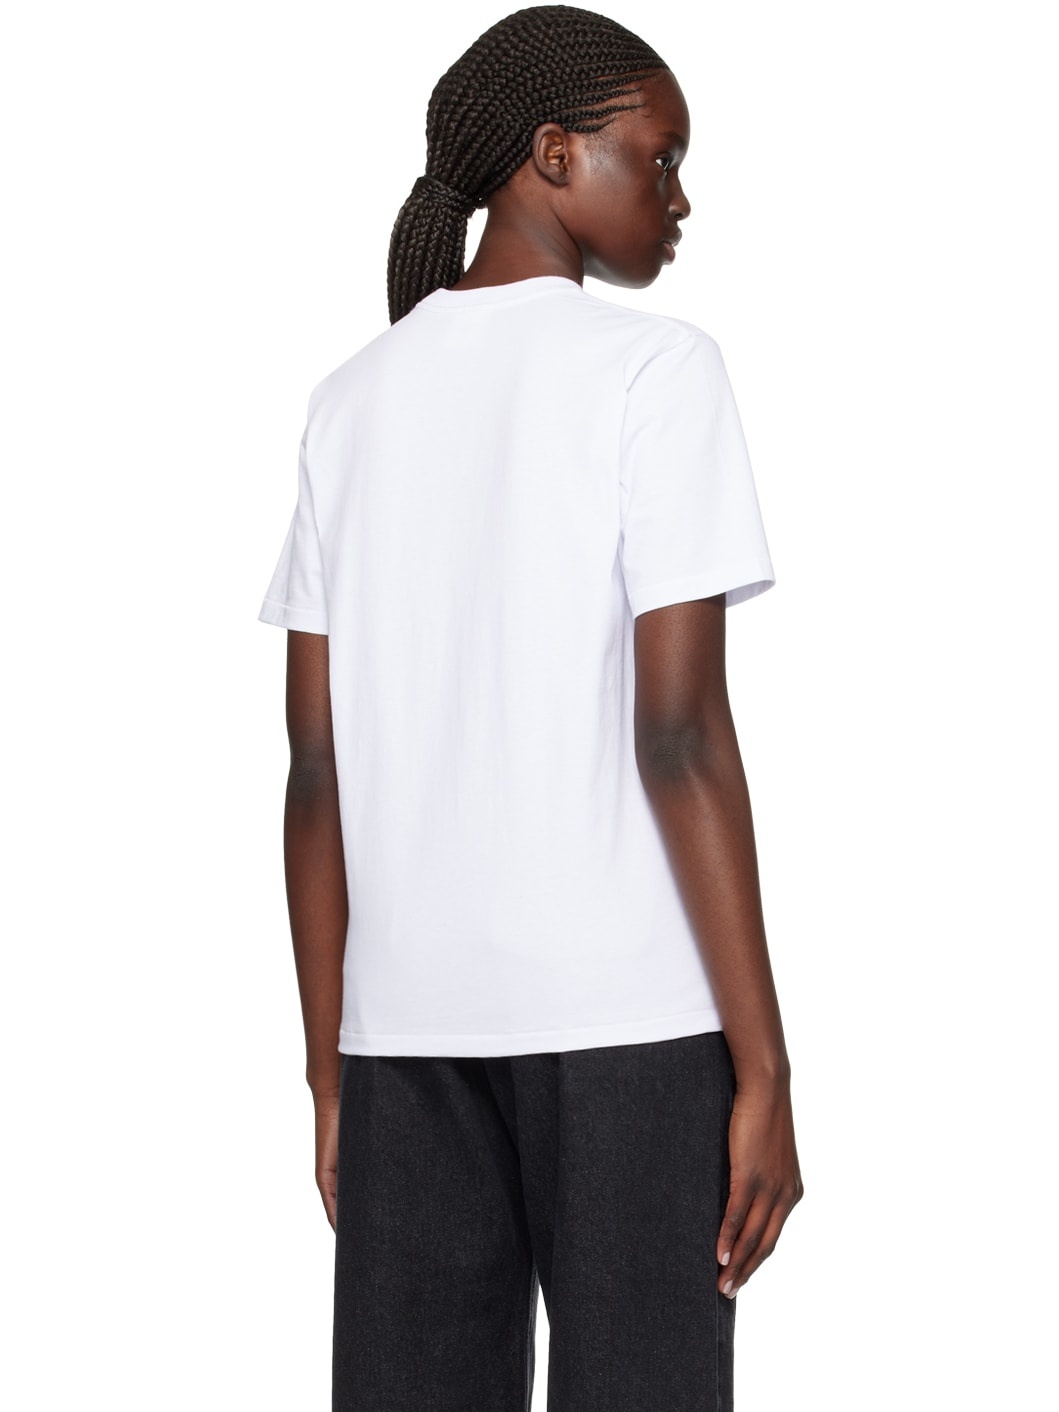 White 1st Camo College T-Shirt - 3